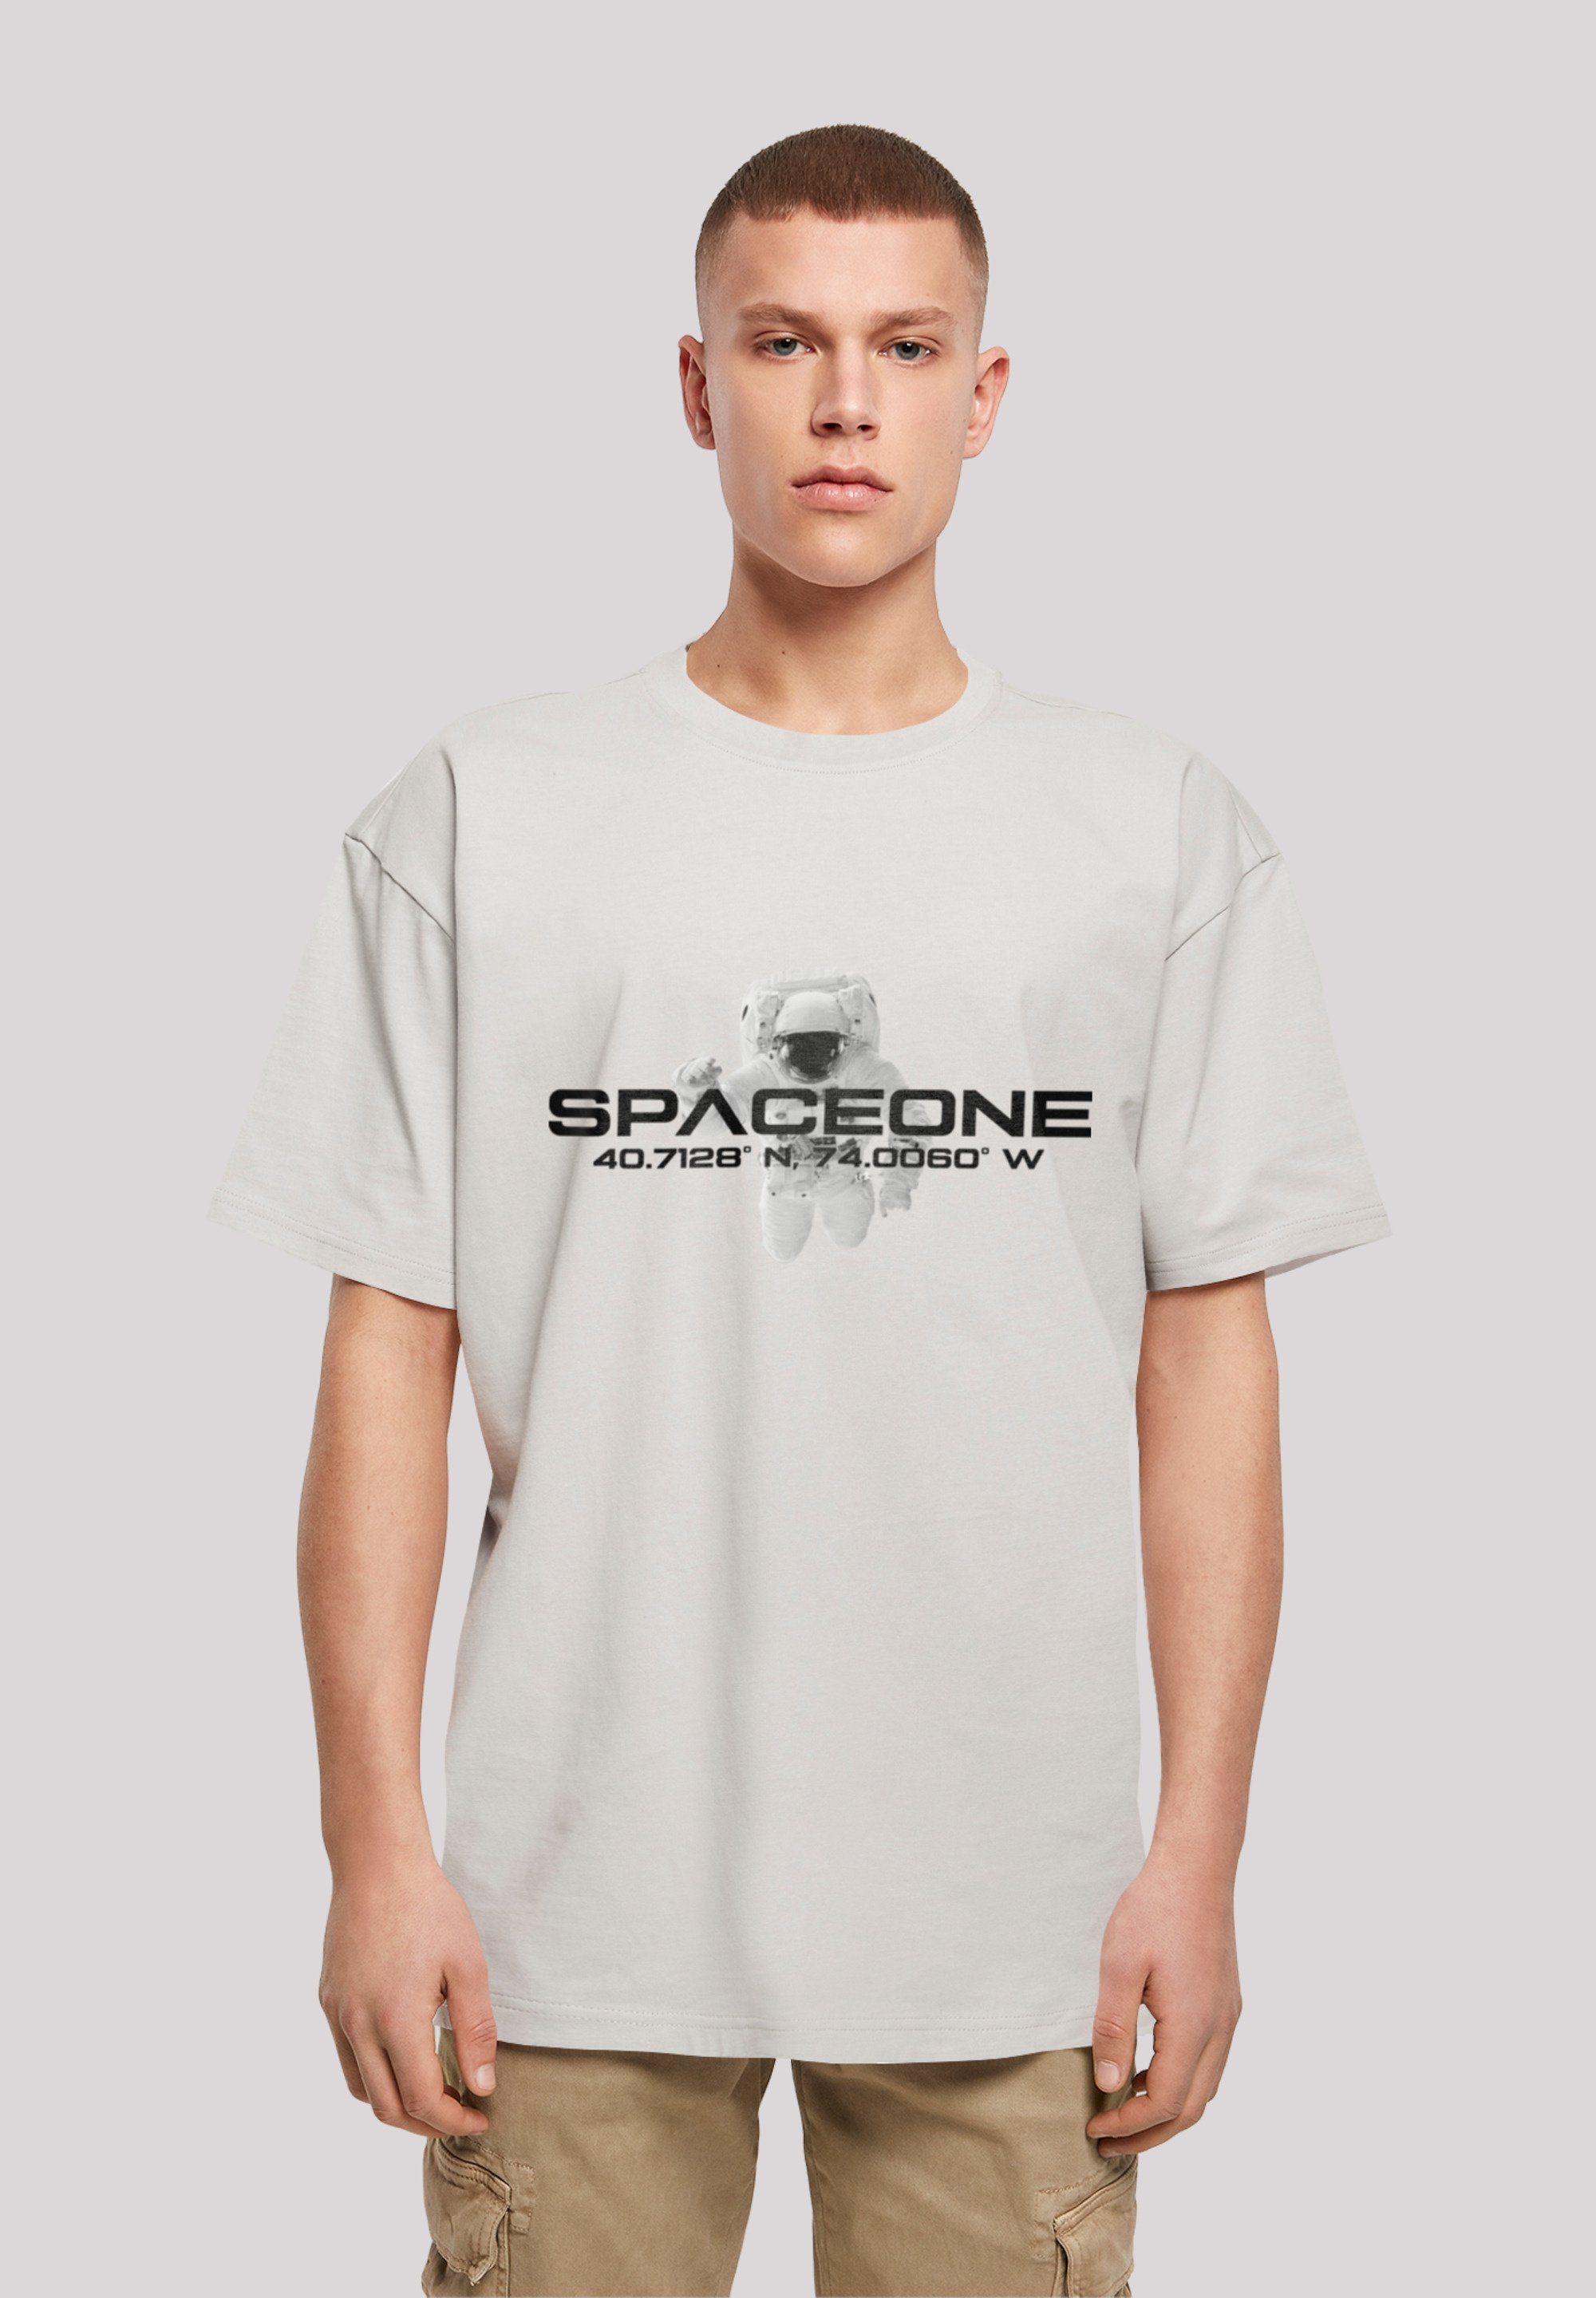 PHIBER SpaceOne T-Shirt F4NT4STIC Print Astronaut lightasphalt